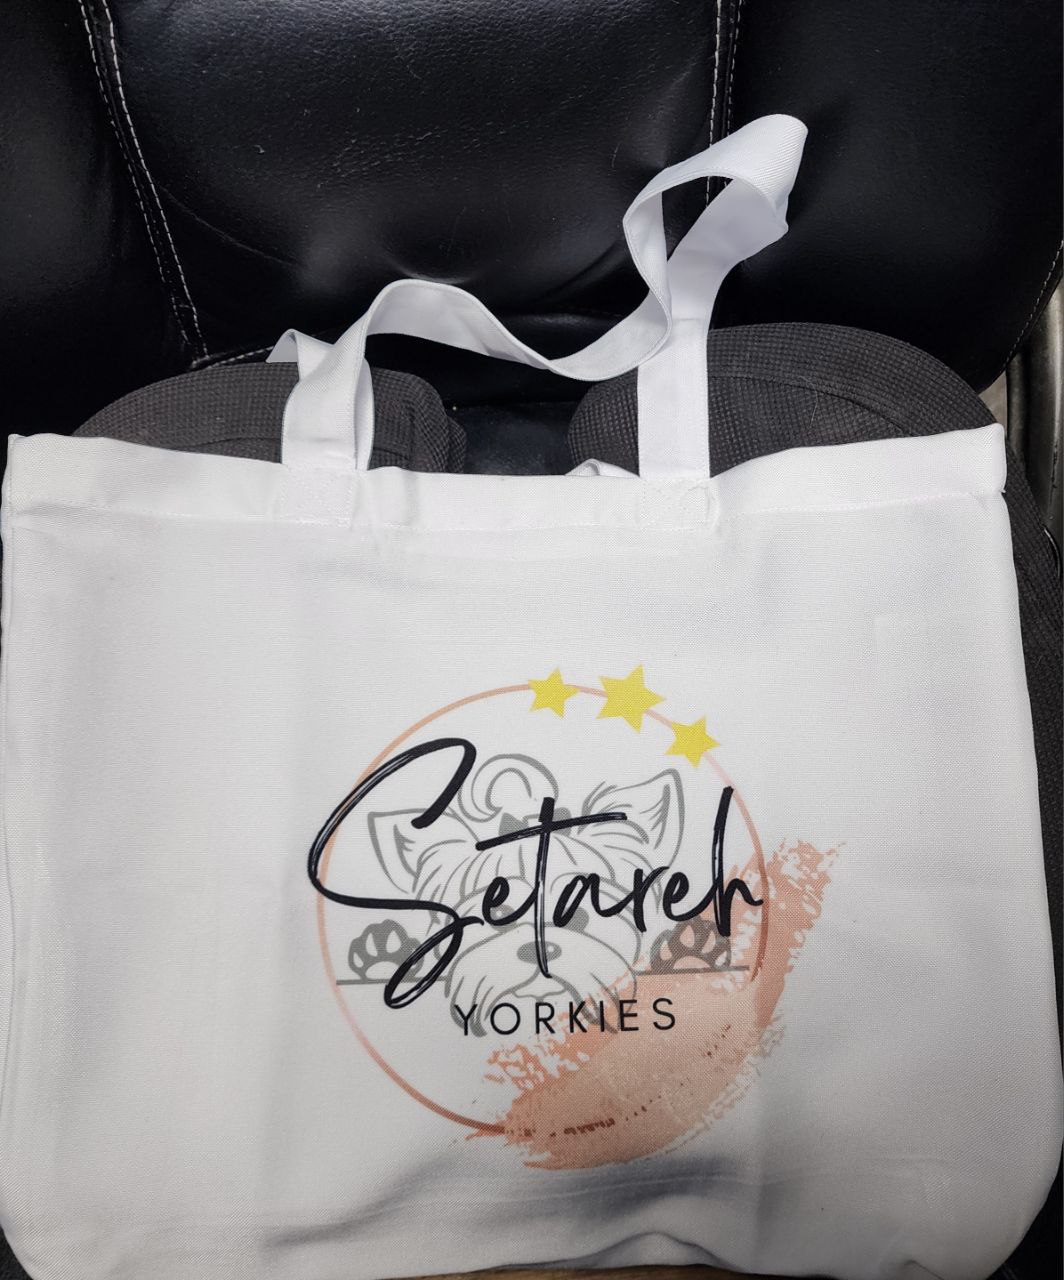 Go Home Bag with Setareh Yorkies Logo on it